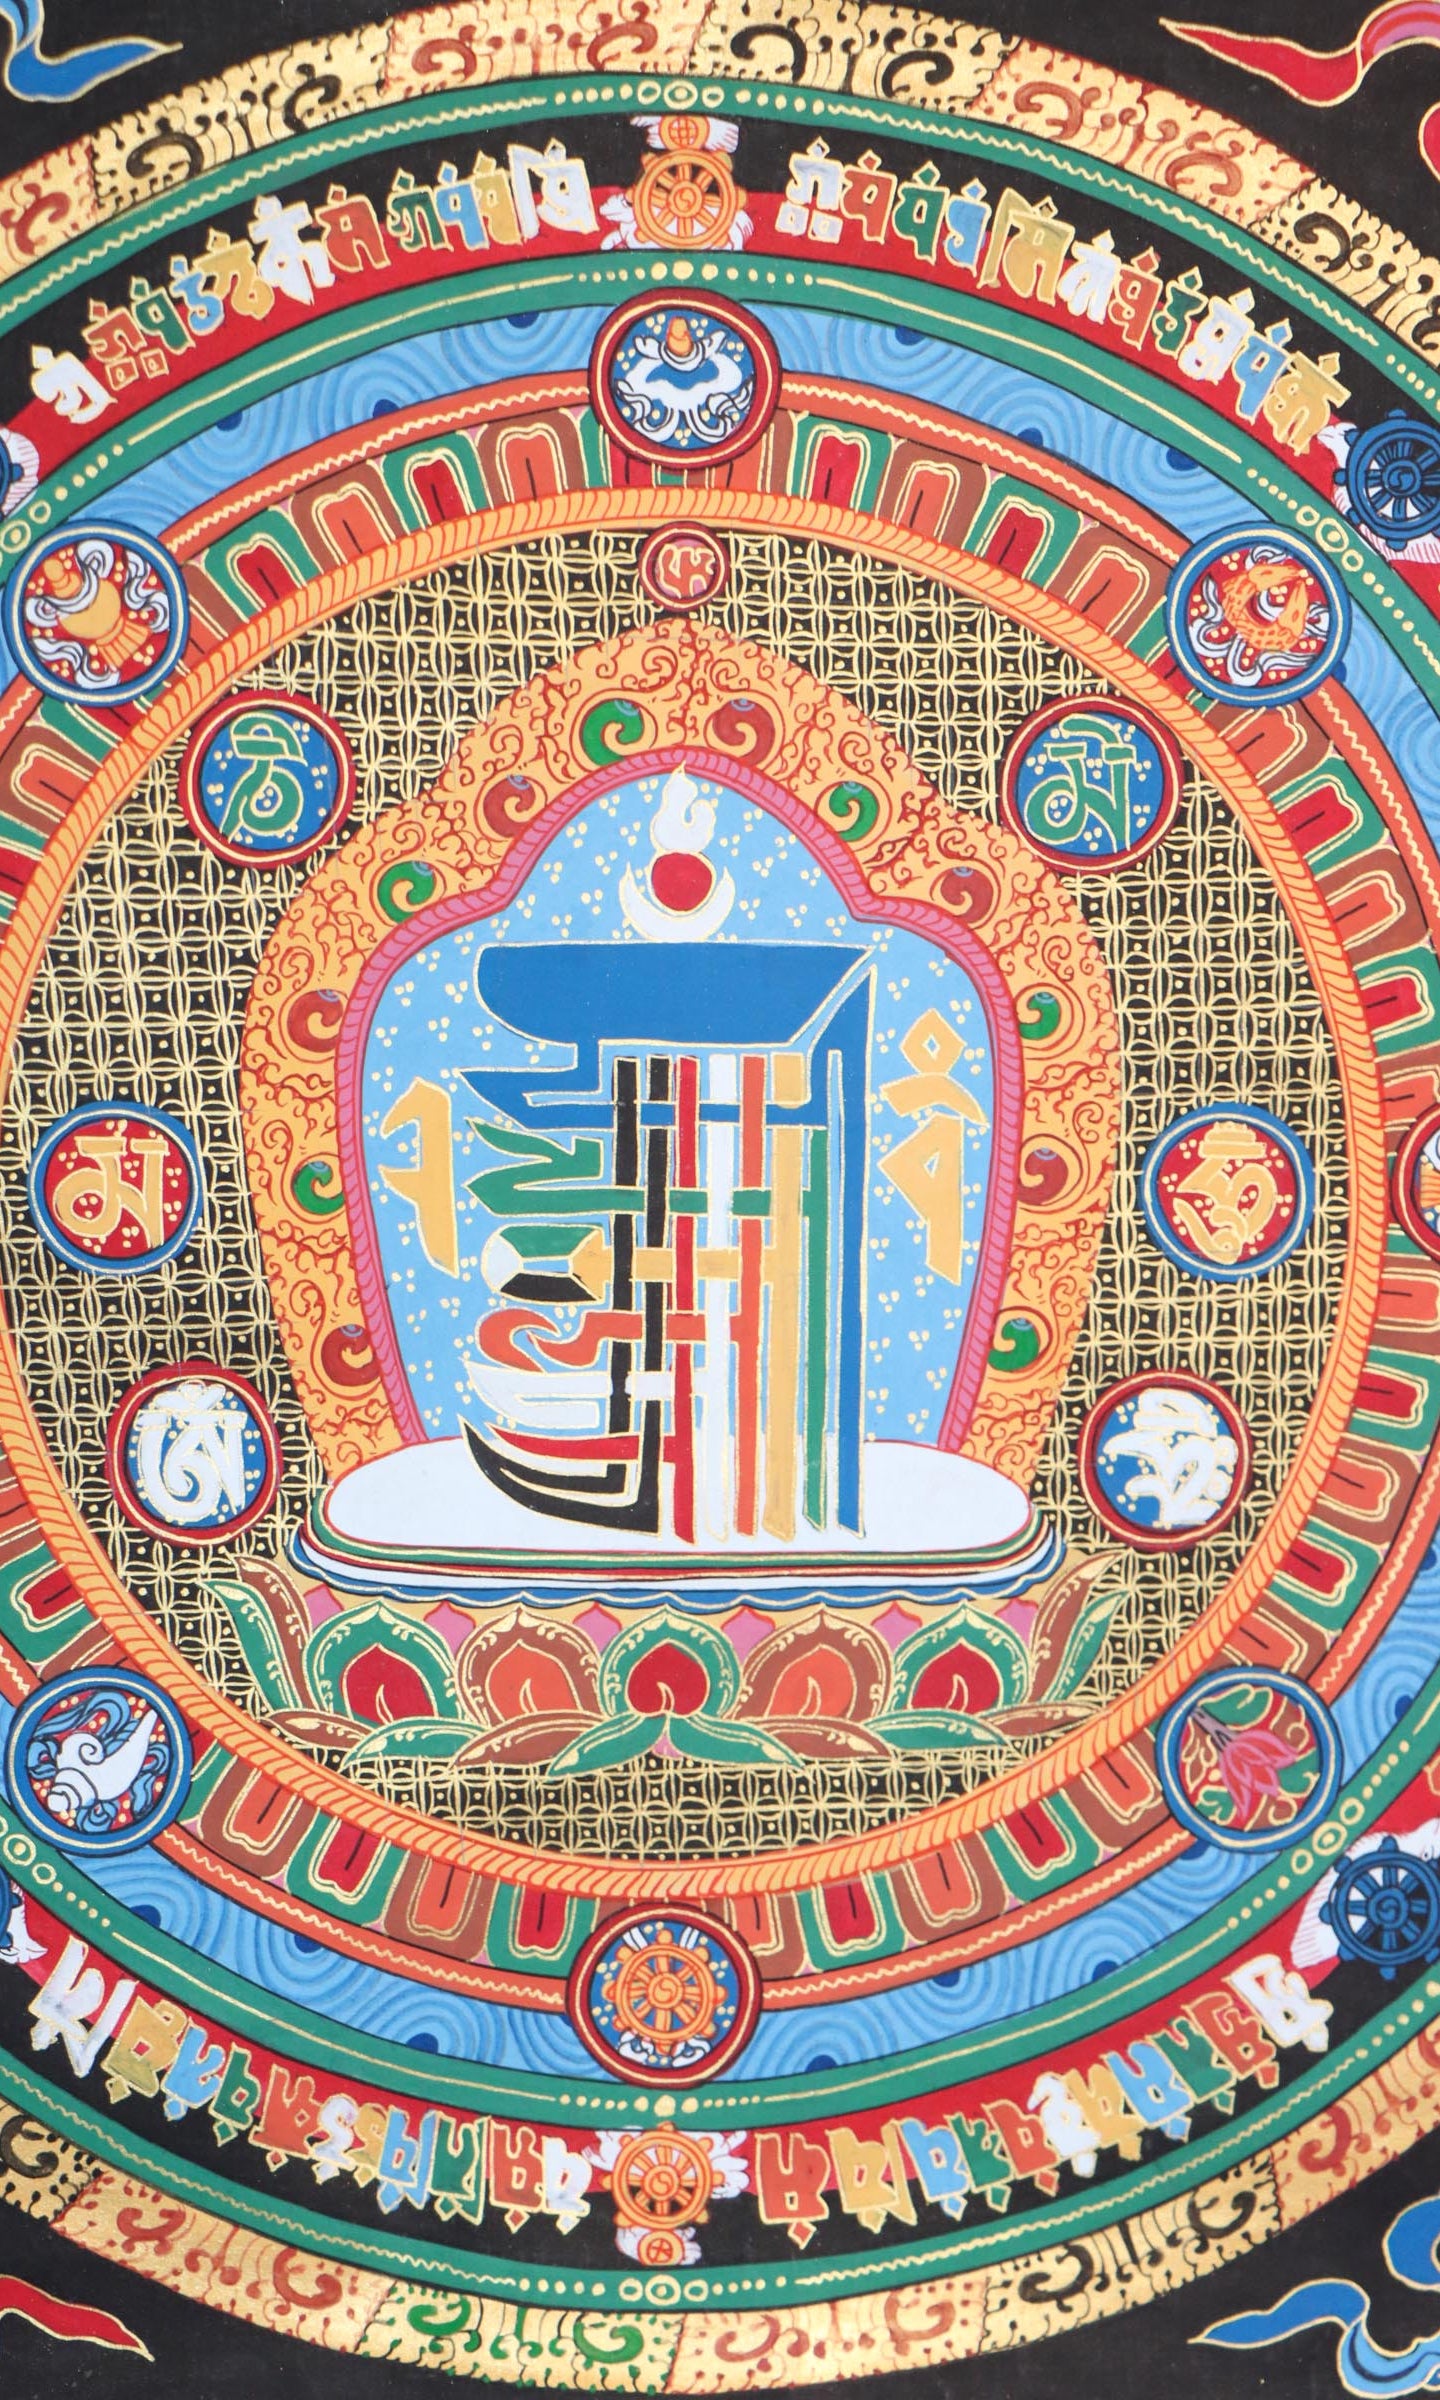 Kalchakra Mantra of 12 syllables Thangka Painting on canvas